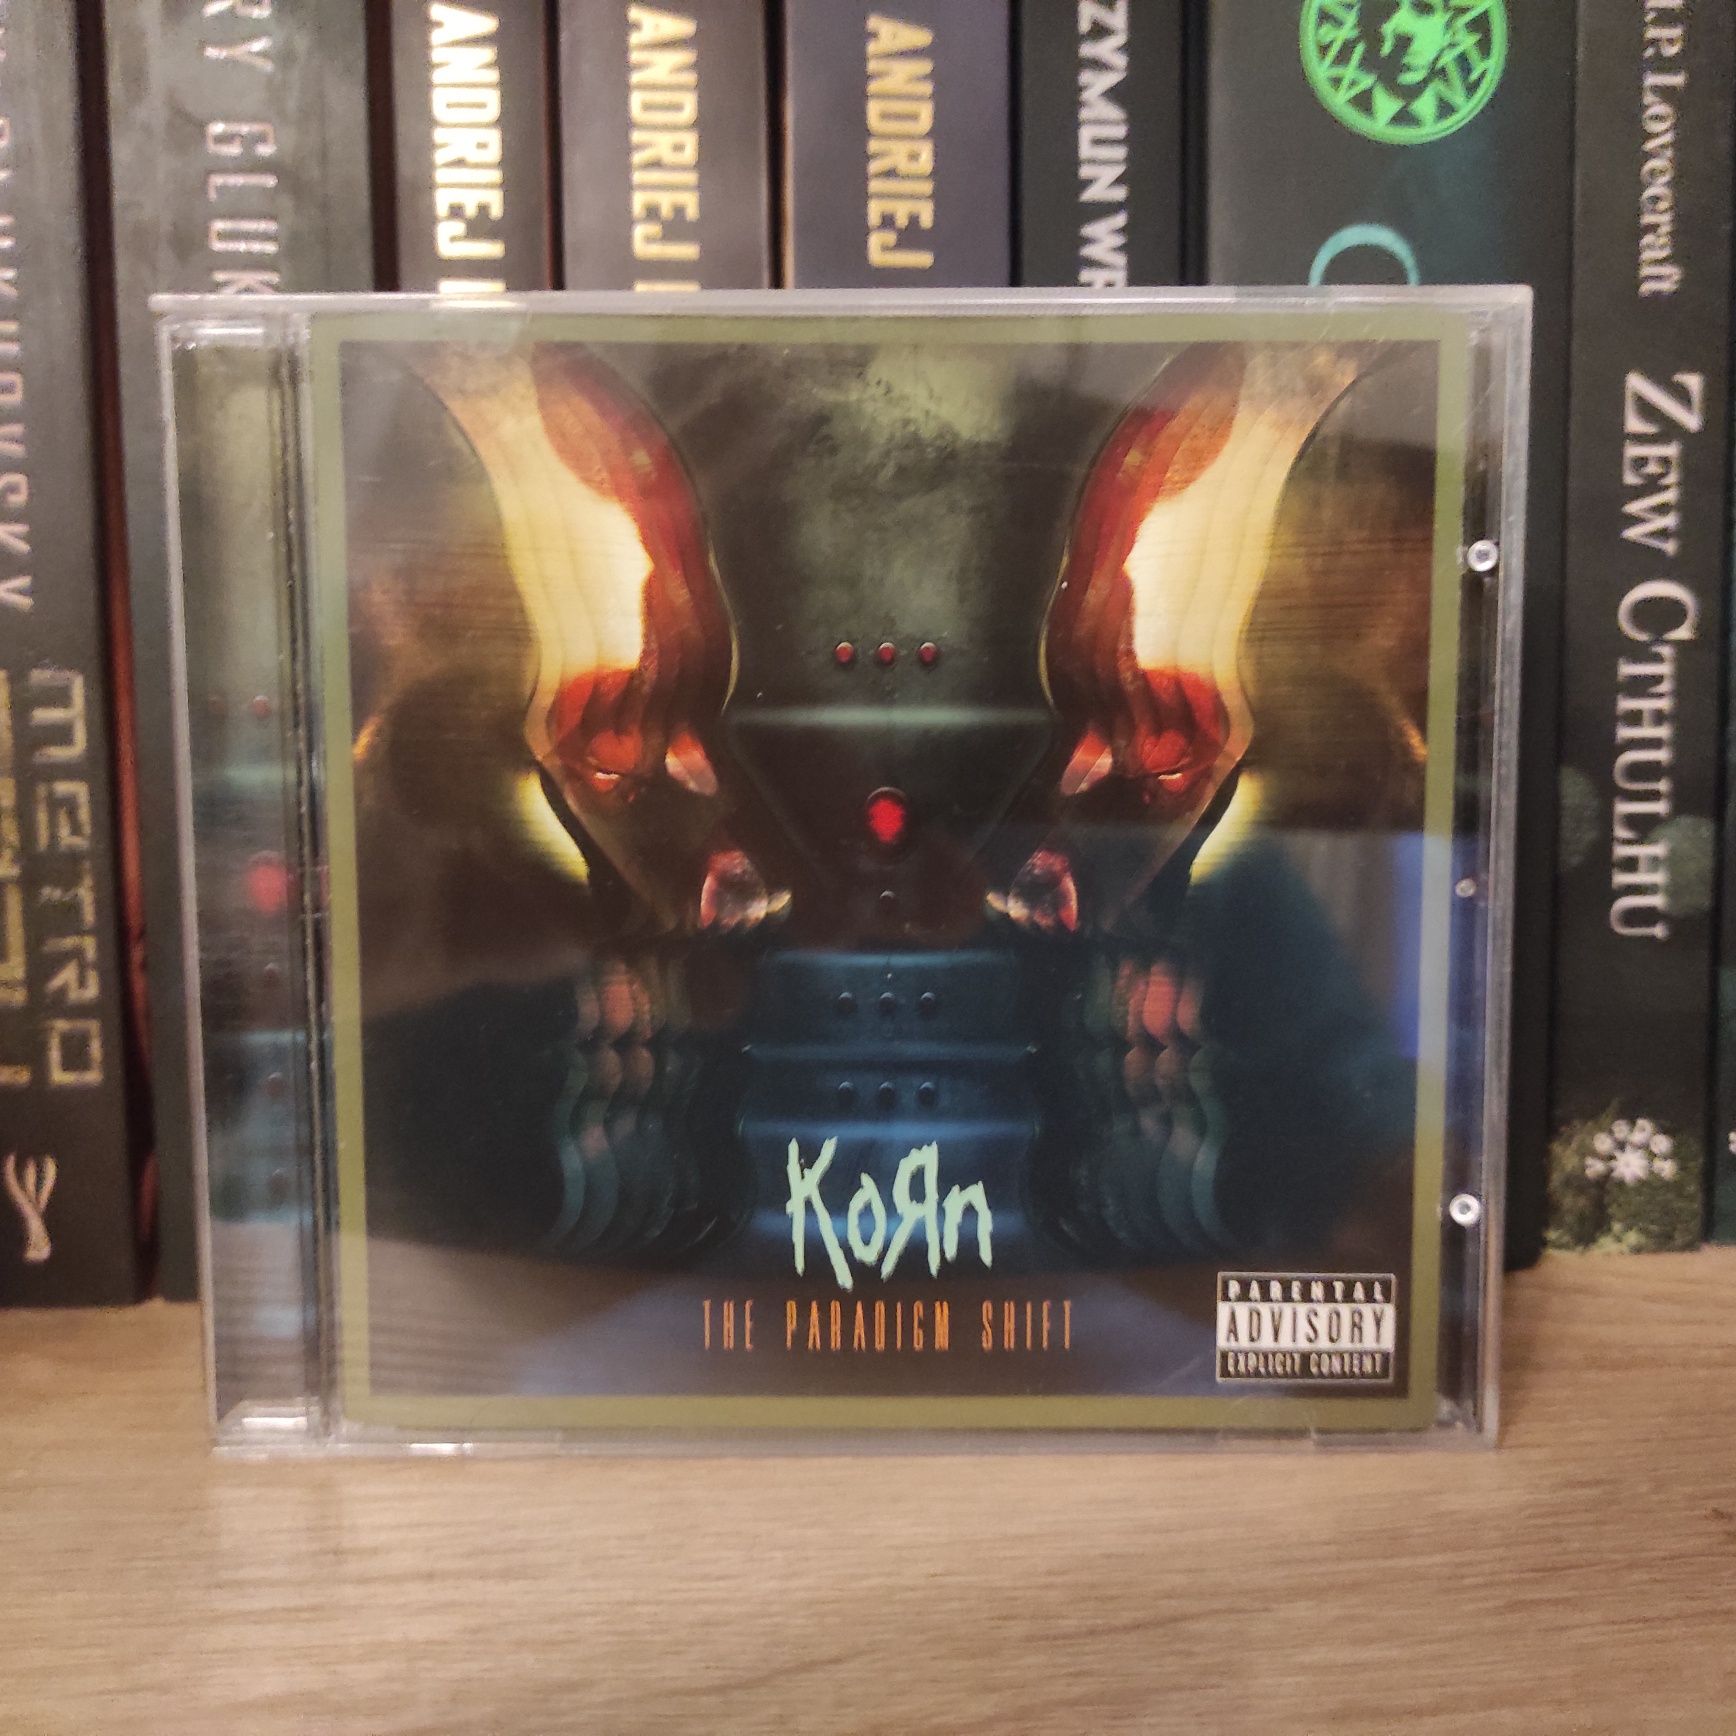 Korn - The Paradigm Shift CD